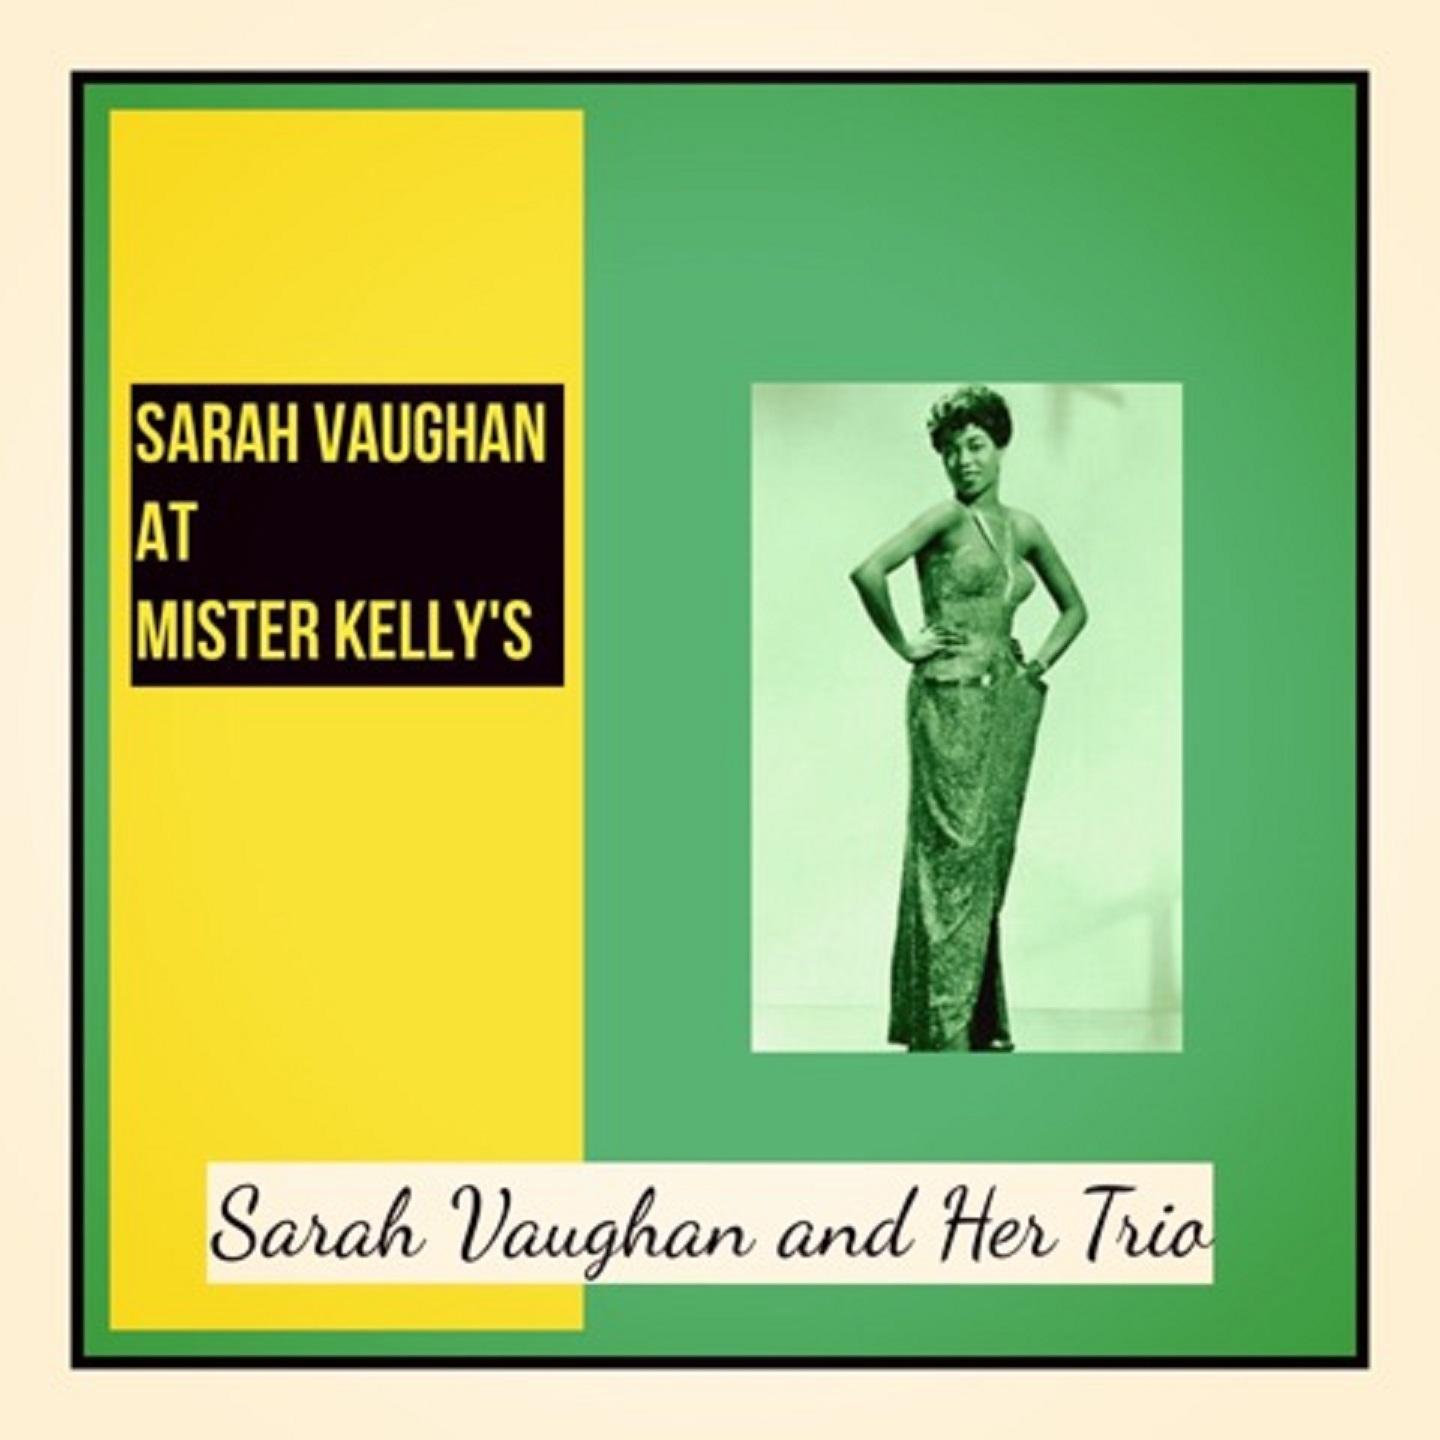 Sarah Vaughan at Mister Kelly's